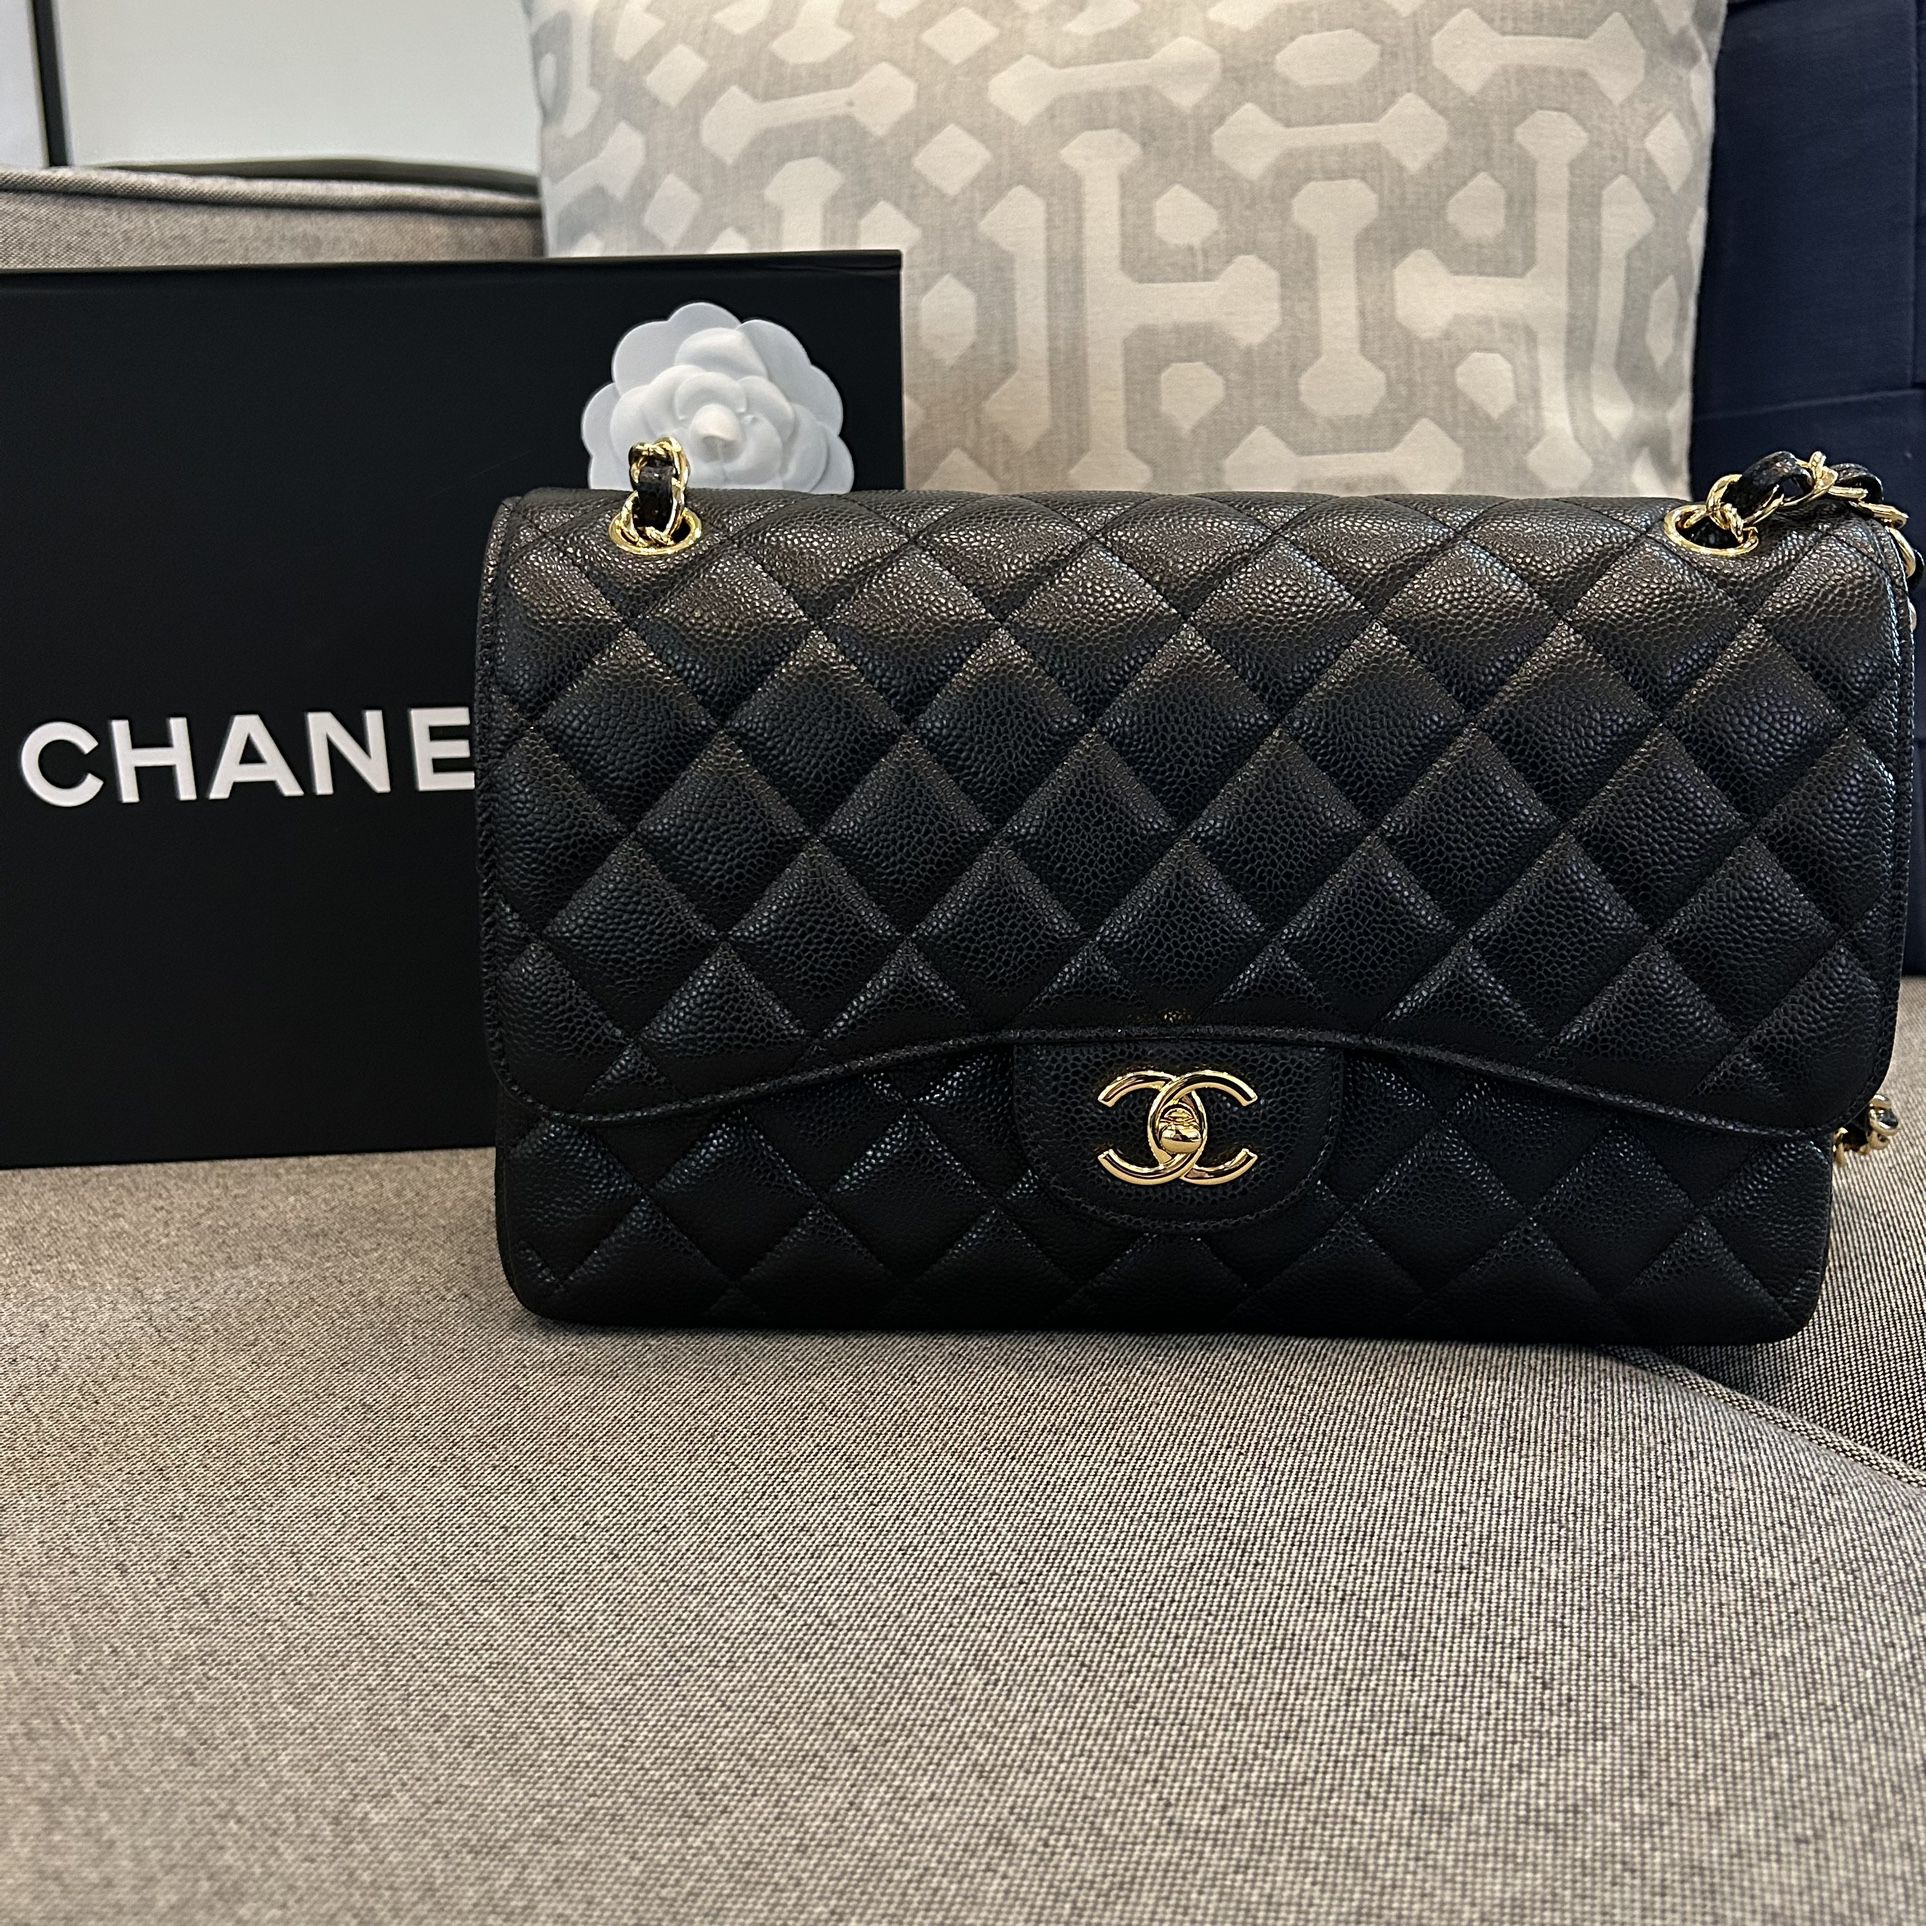 Authentic Chanel Classic Jumbo Caviar Handbag